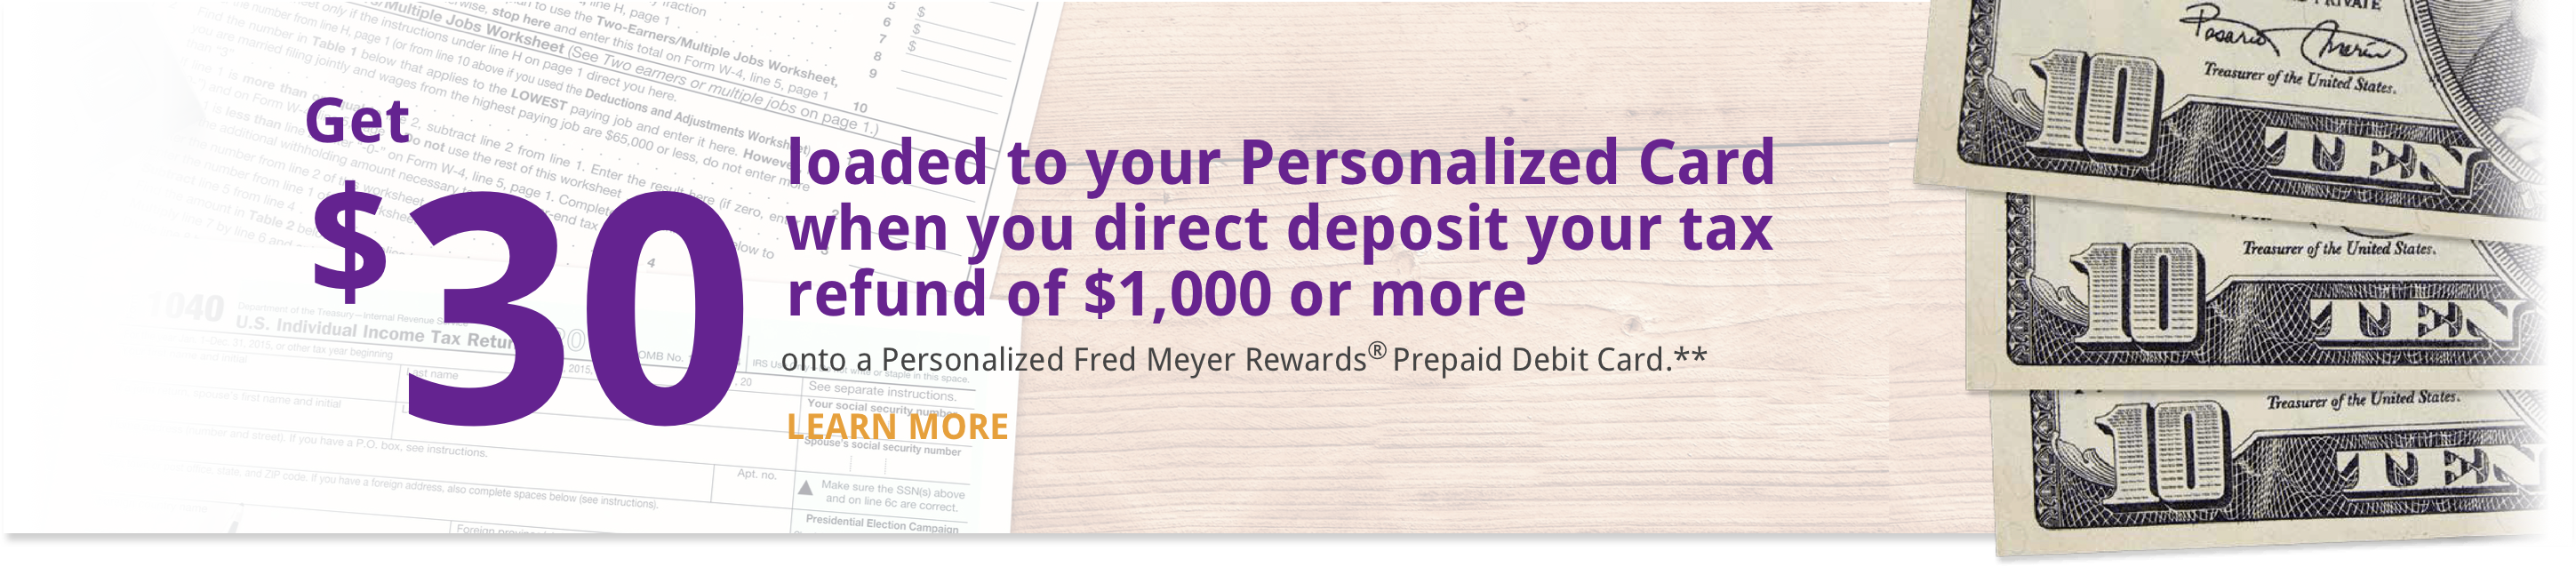 Prepaid Debit Card Fred Meyer Prepaid Debit Card